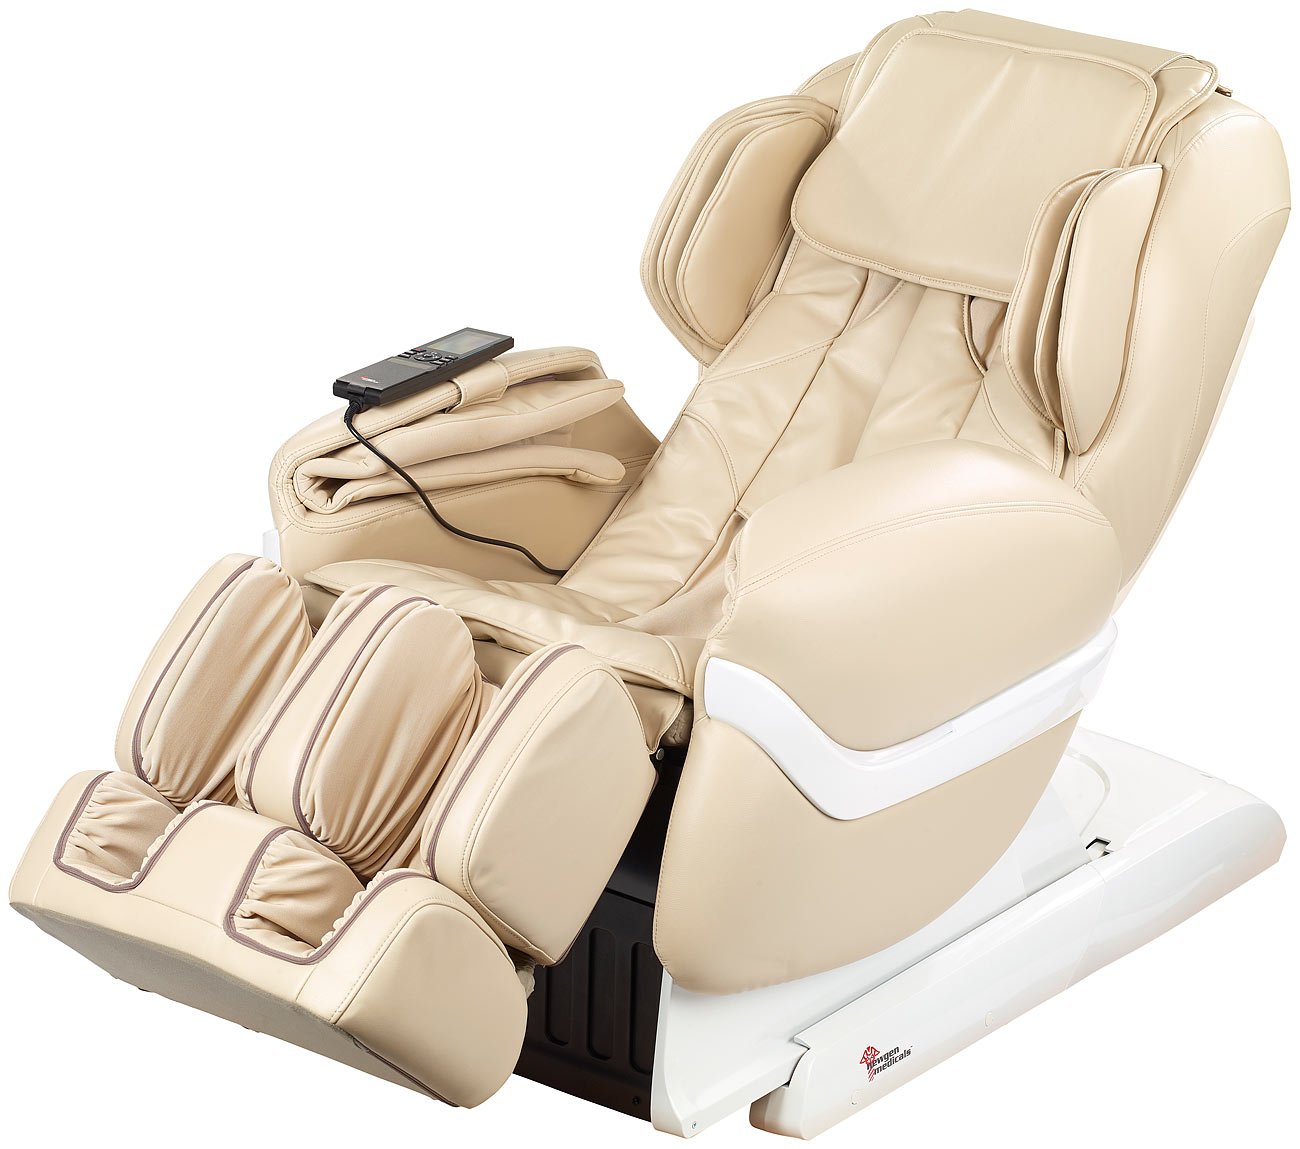 Newgen Medicals Ganzkörper Massage: Luxus-Ganzkörper-Massagesessel GMS-150 mit Infrarot-Wärme, beige (Massagesessel mit Wärmefunktion, Massagesessel Relaxsessel, Fußmassagegerät)